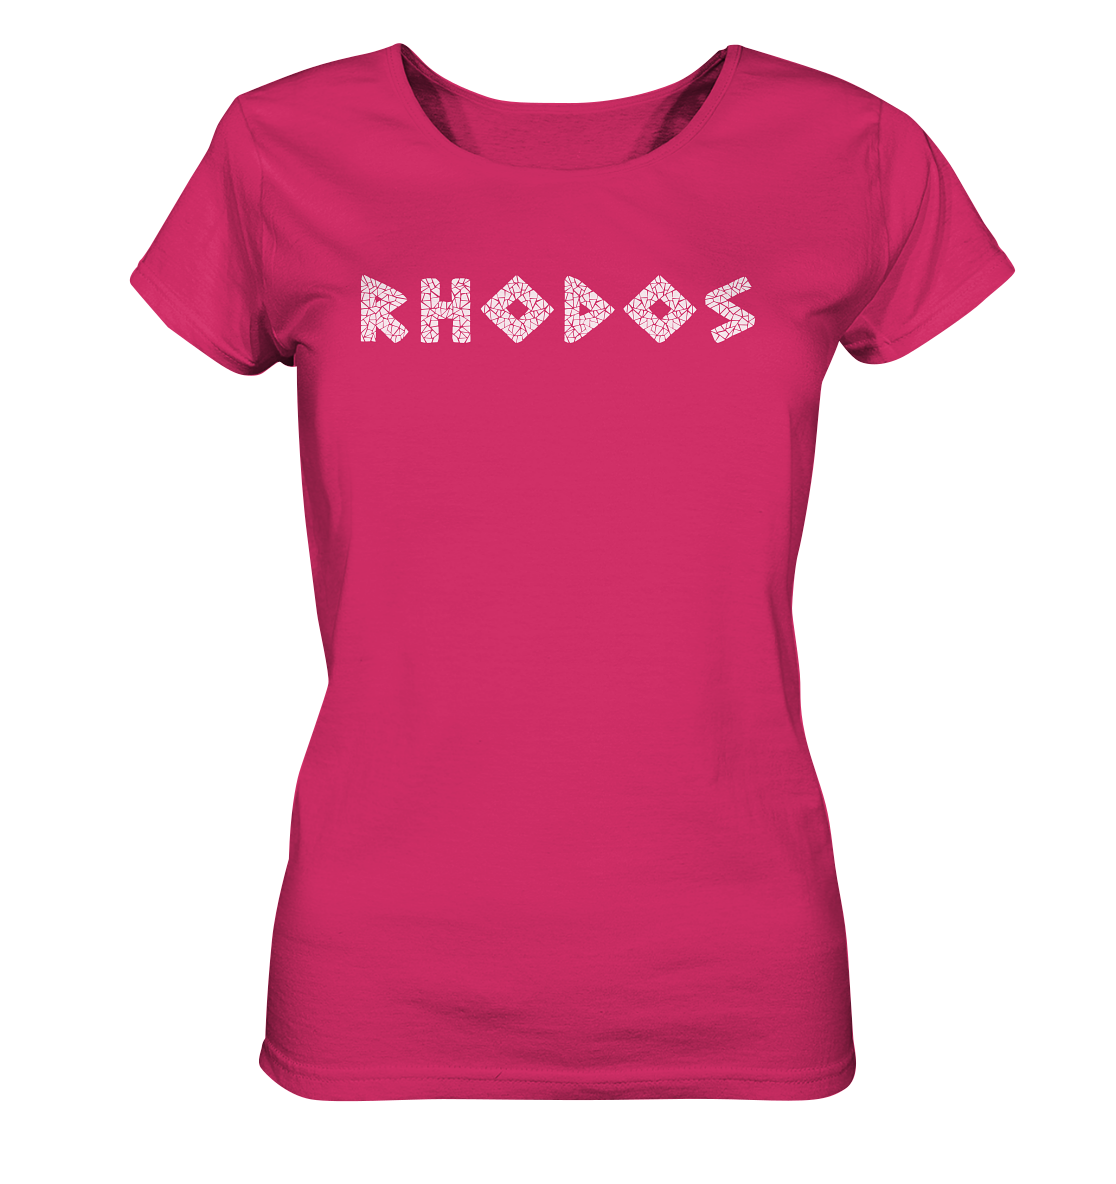 Rhodes Mosaic - Ladies Organic Shirt